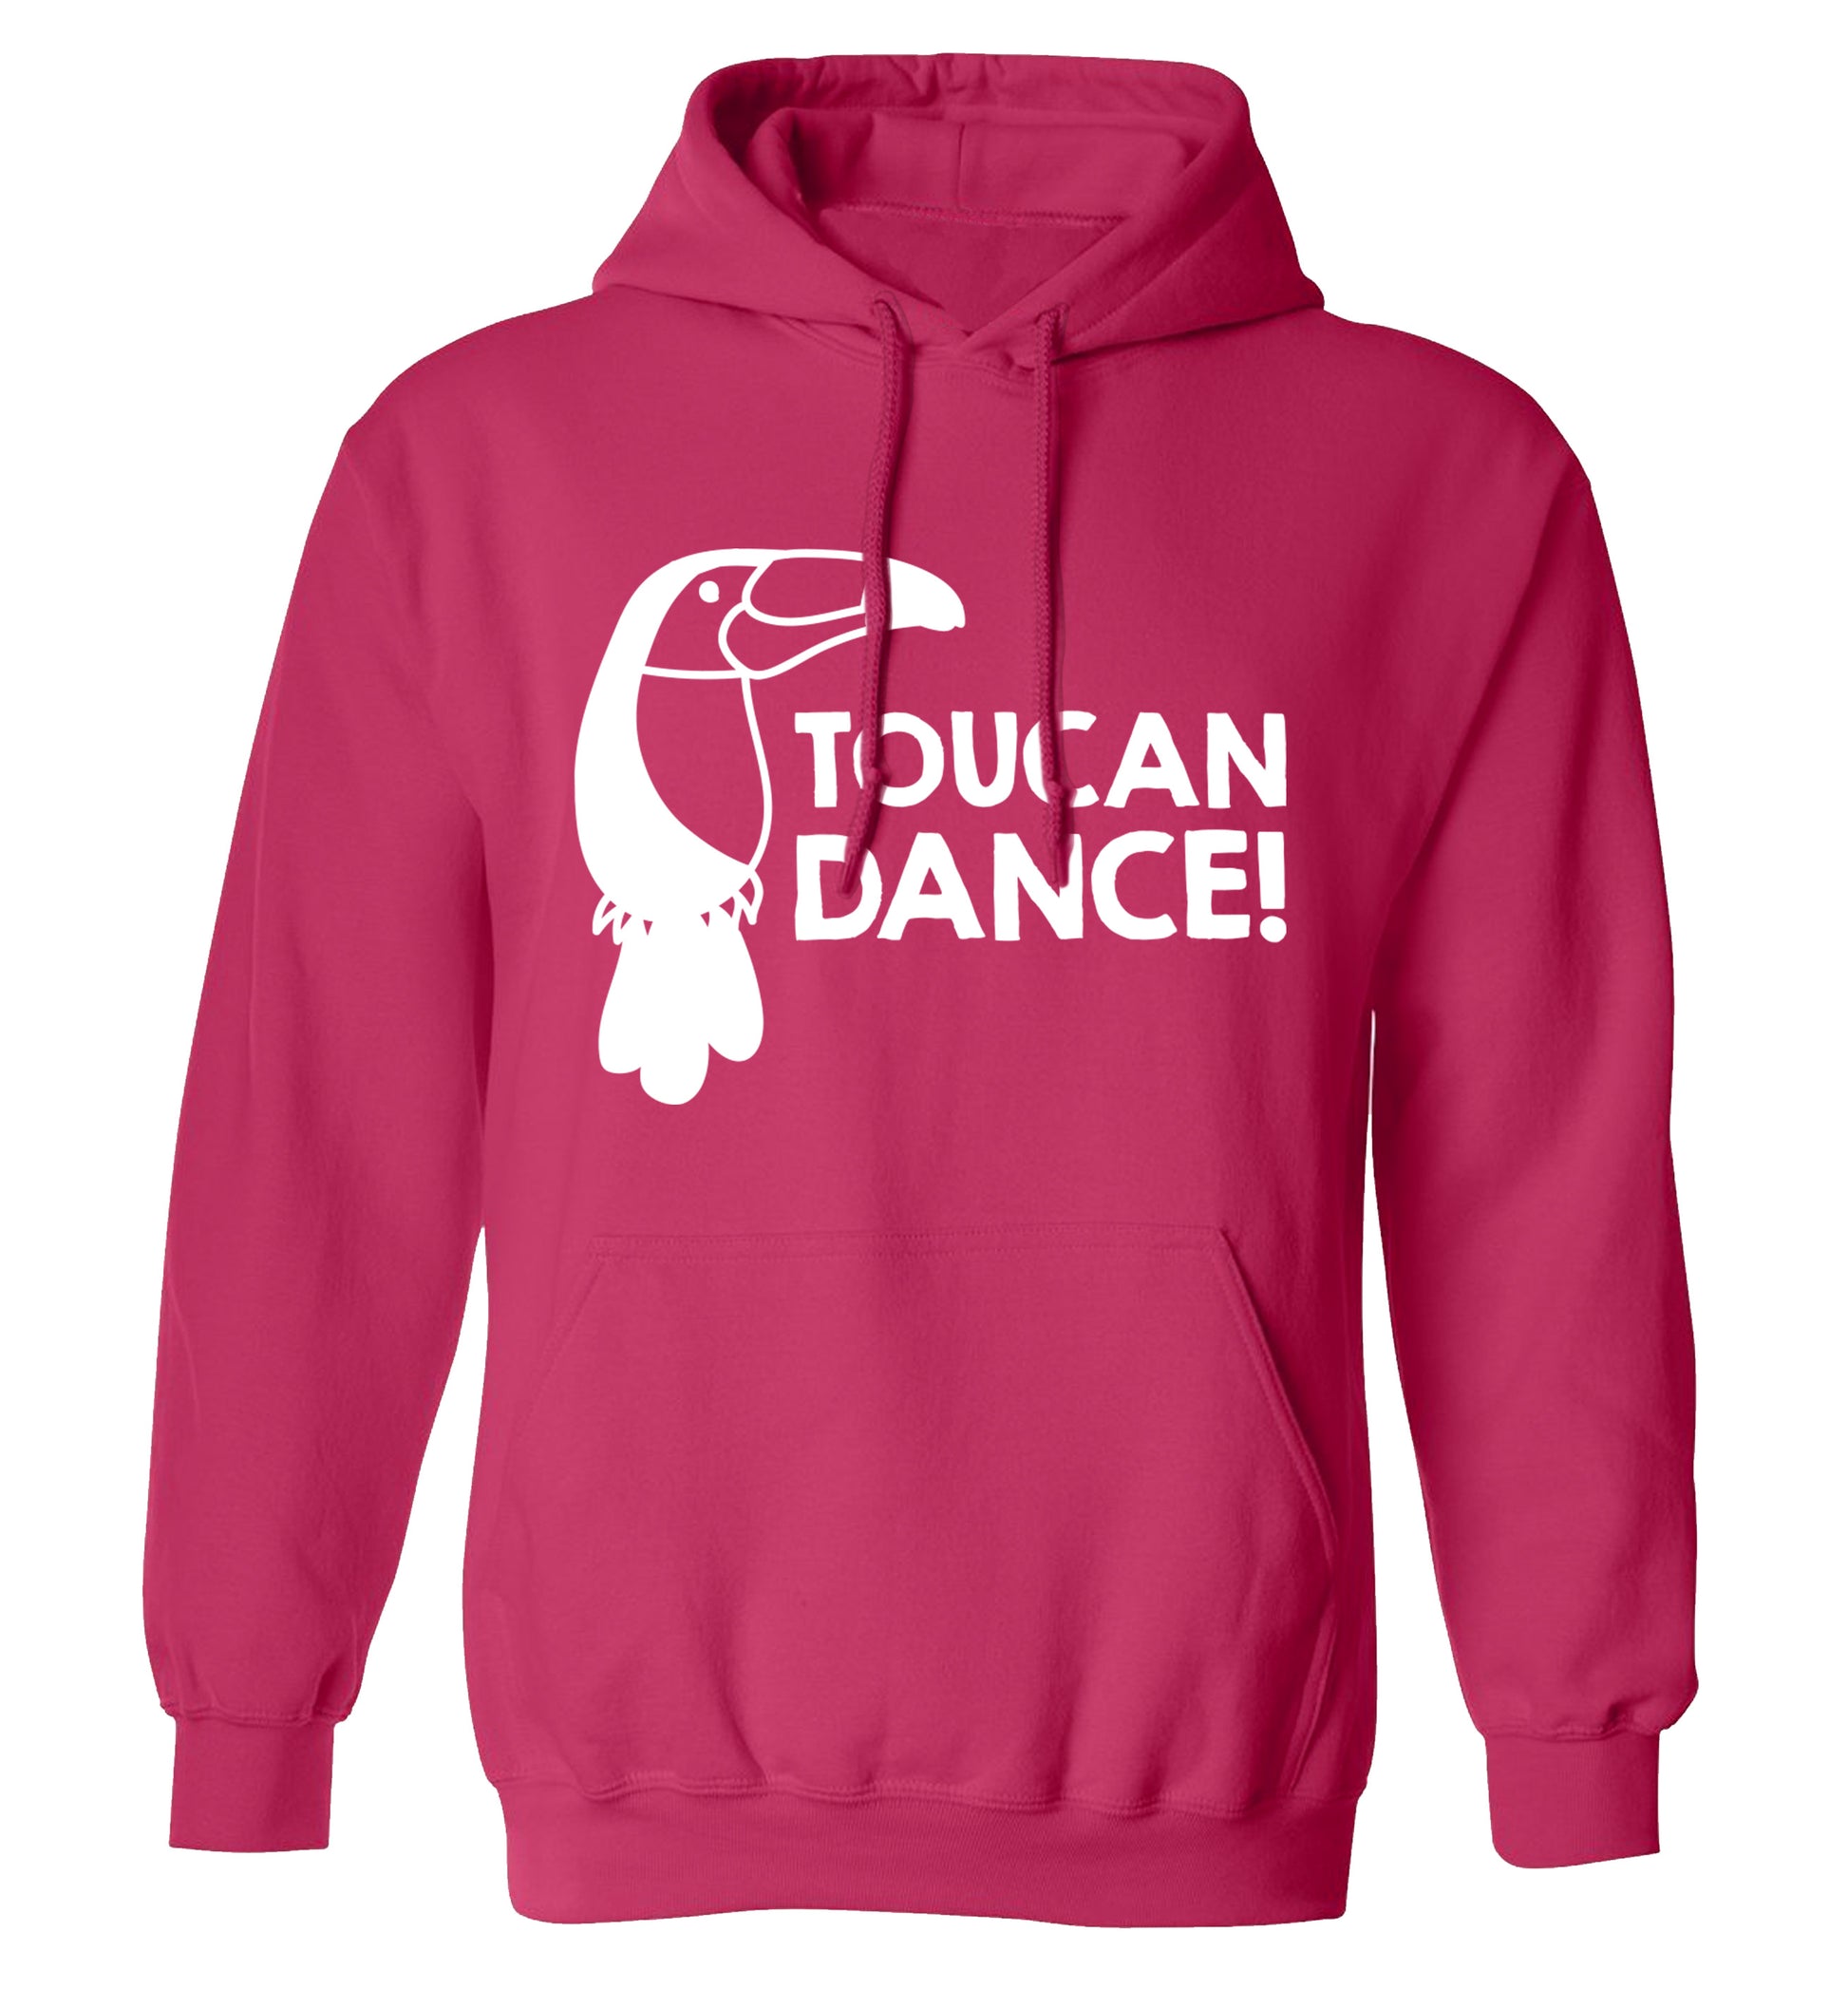 Toucan dance adults unisex pink hoodie 2XL